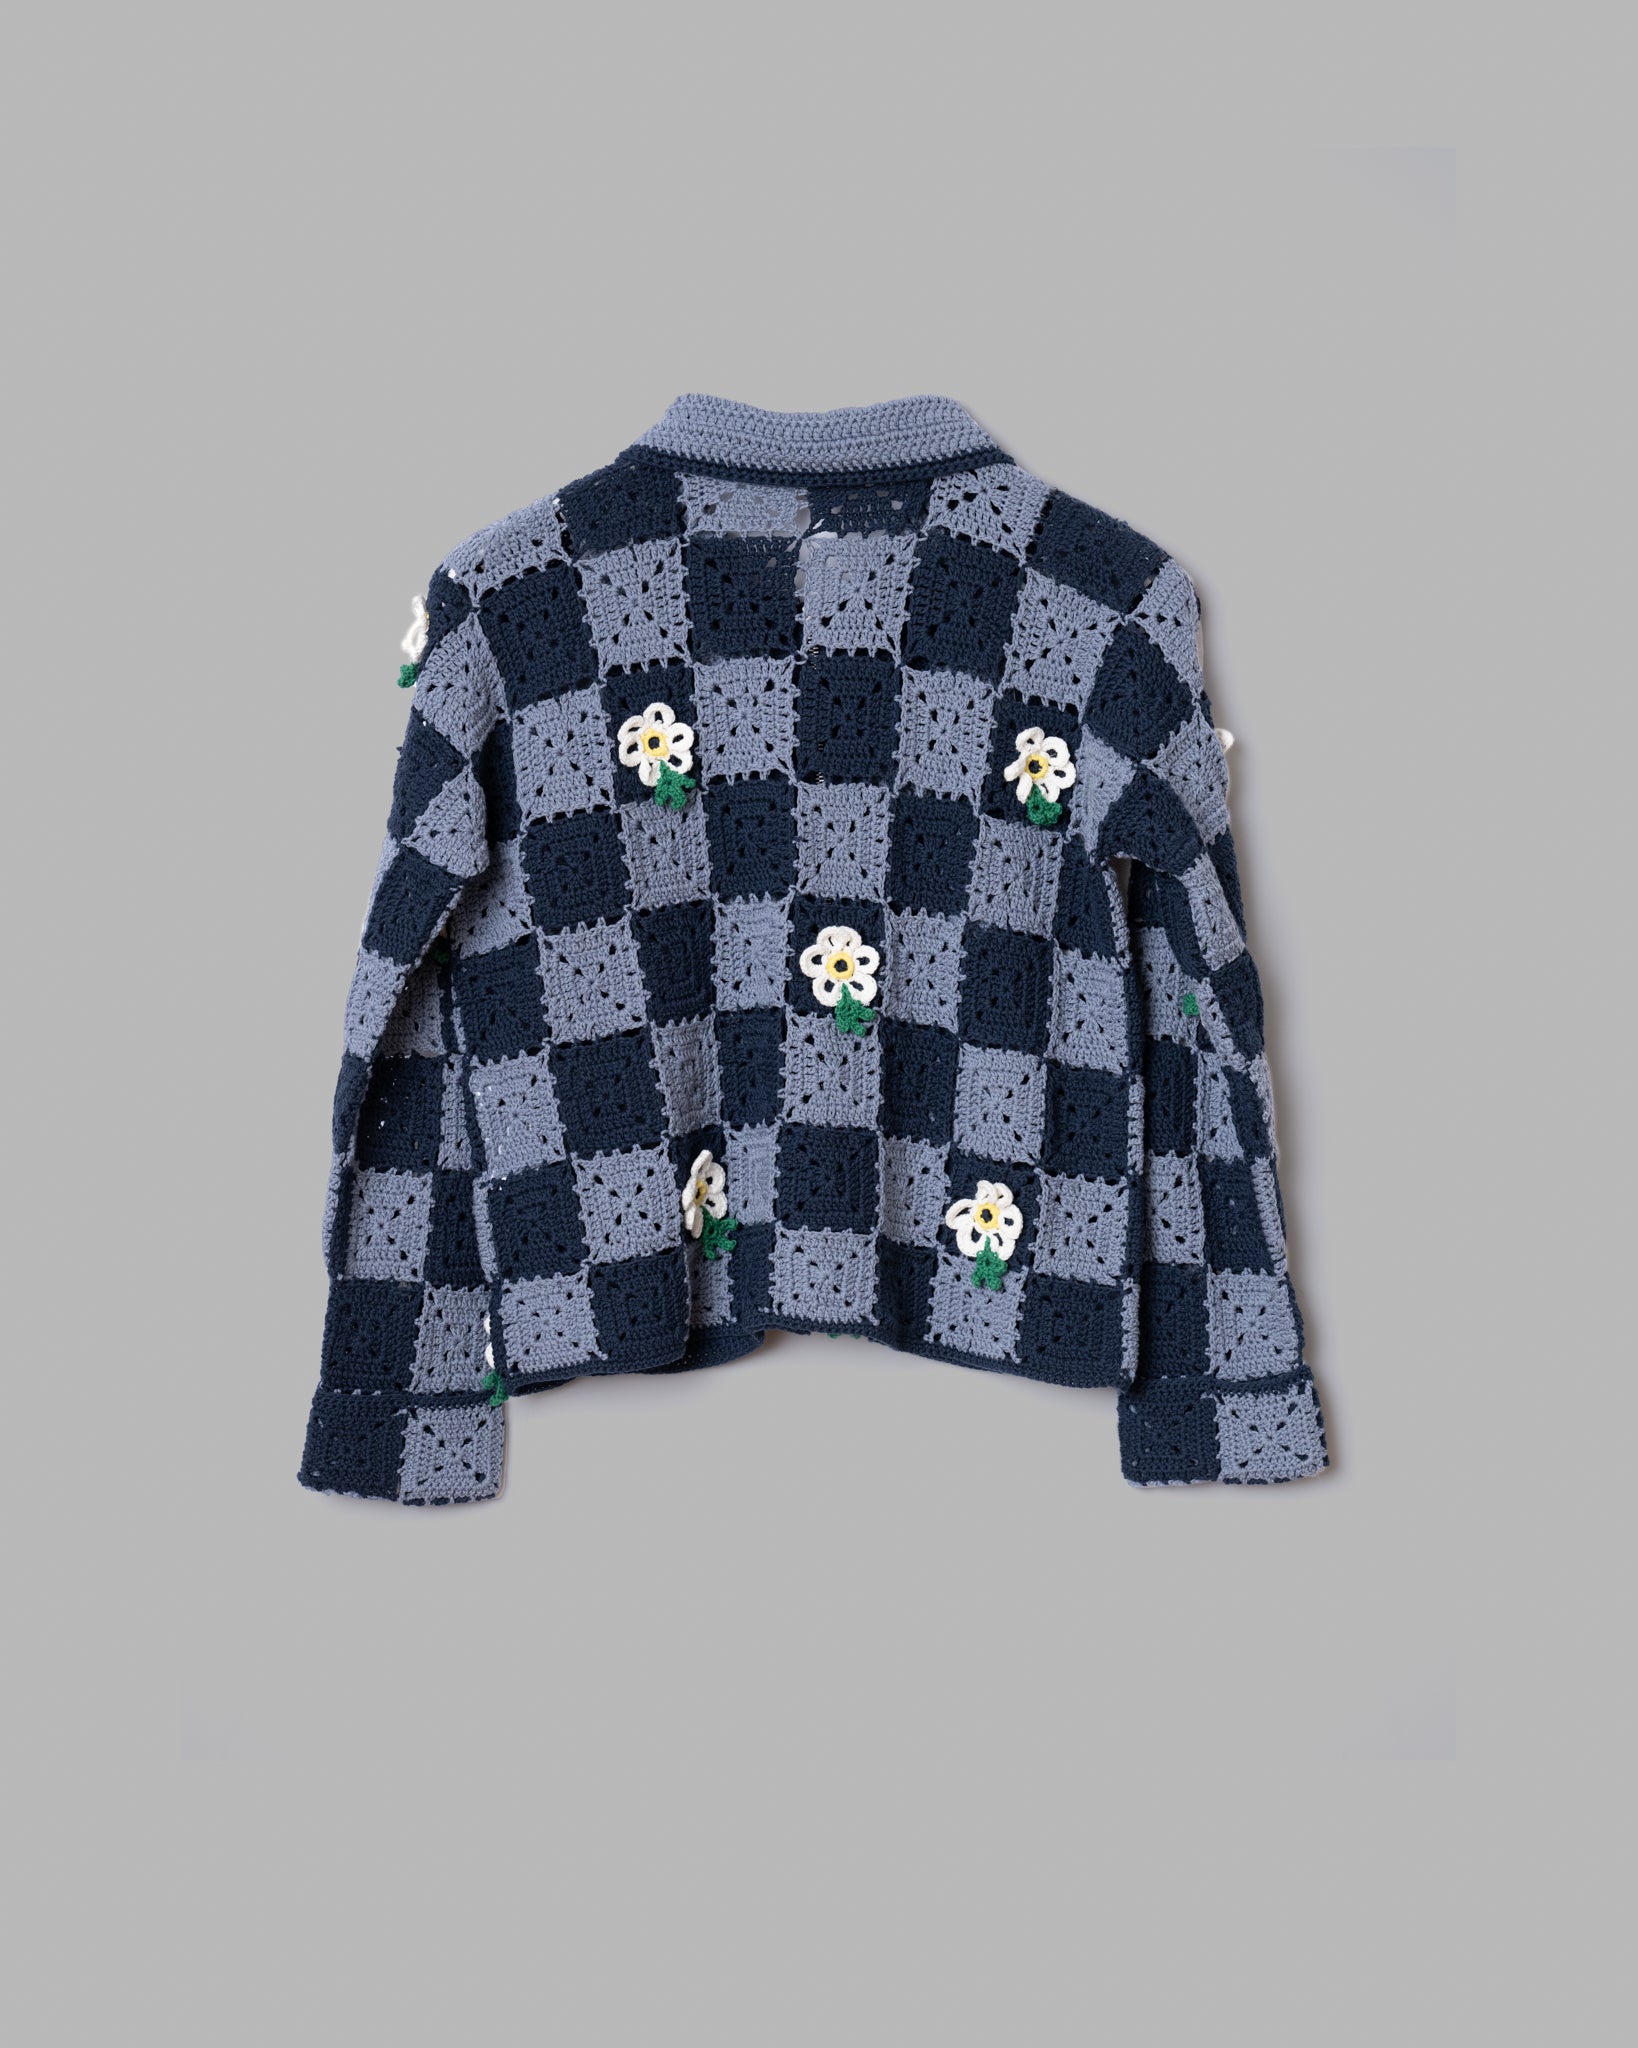 Crochet Flower Motif Hand Knit Jacket -Navy / Light Blue